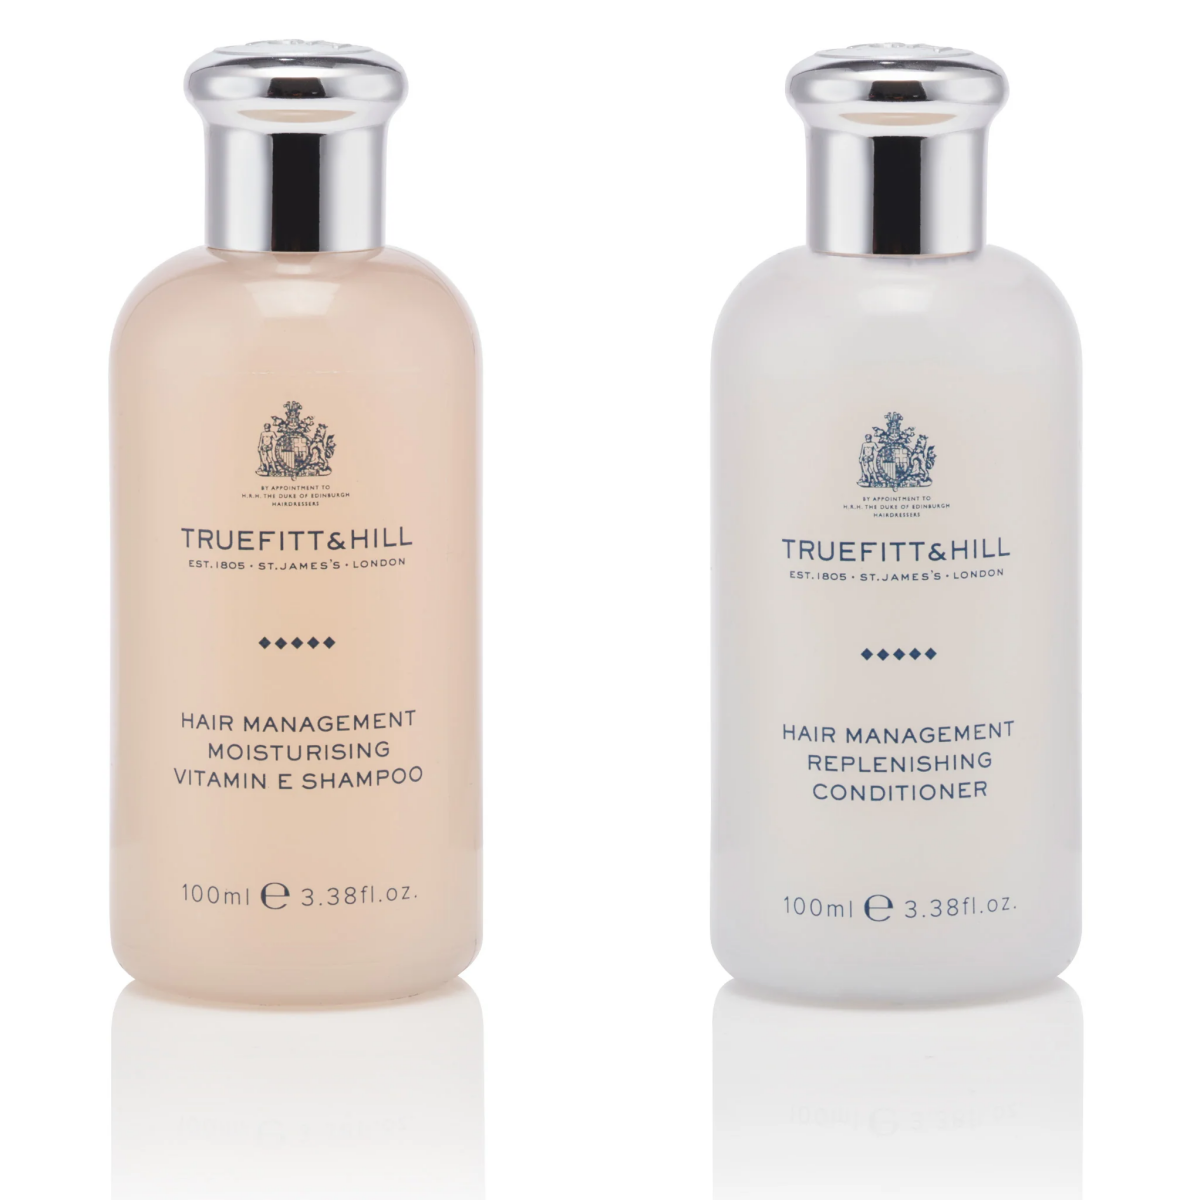 Hair Wash Travel Gift Set with Moisturising Vitamin E Shampoo